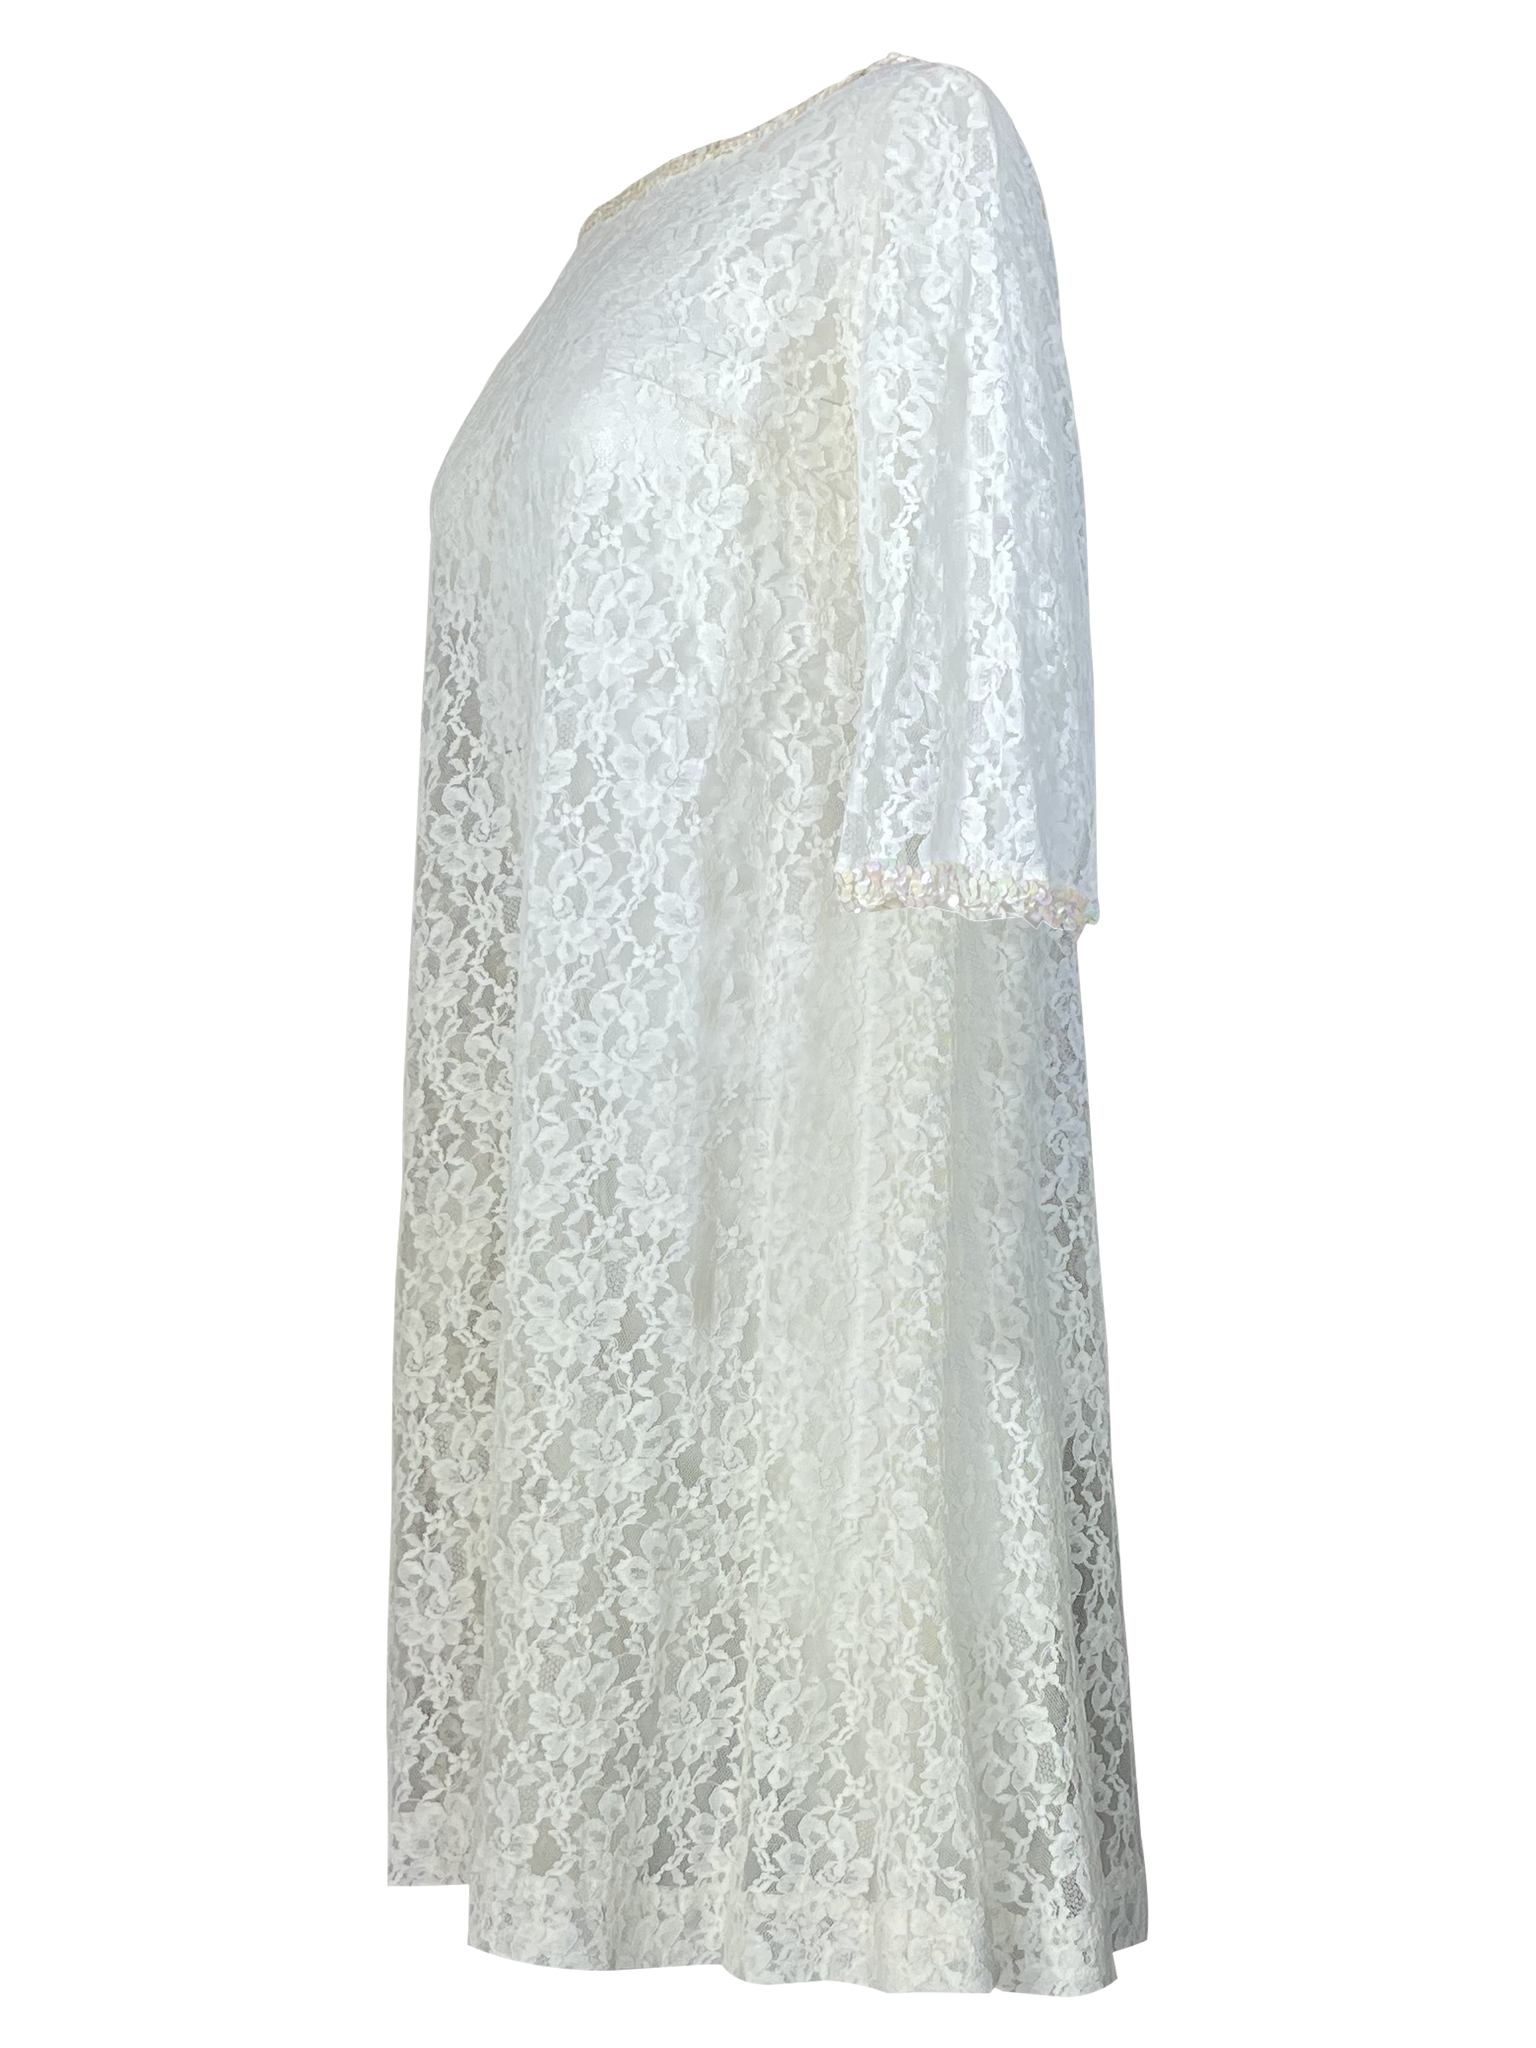 Queen Anne's Lace Dress